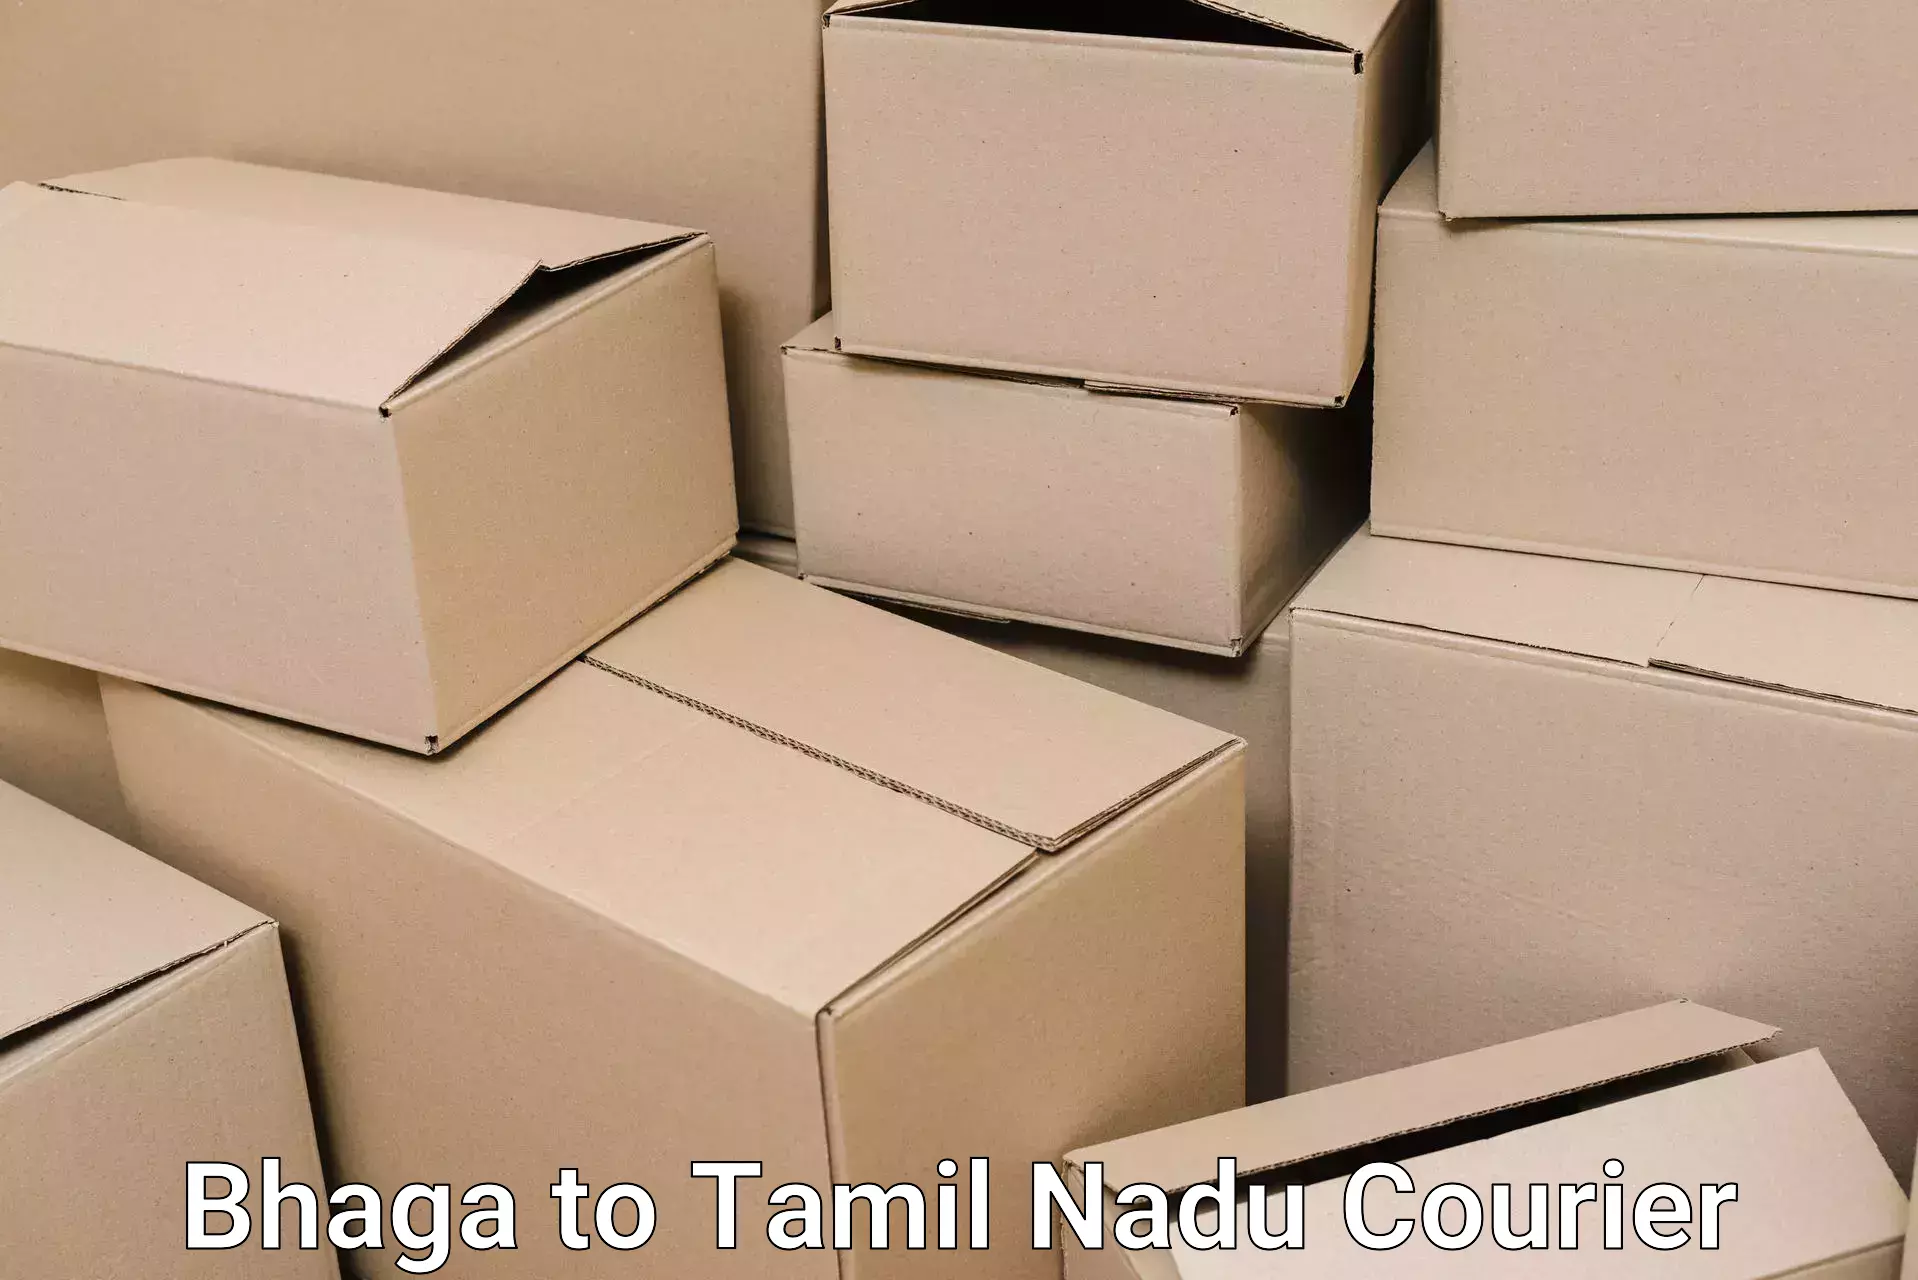 Professional moving company Bhaga to Tamil Nadu